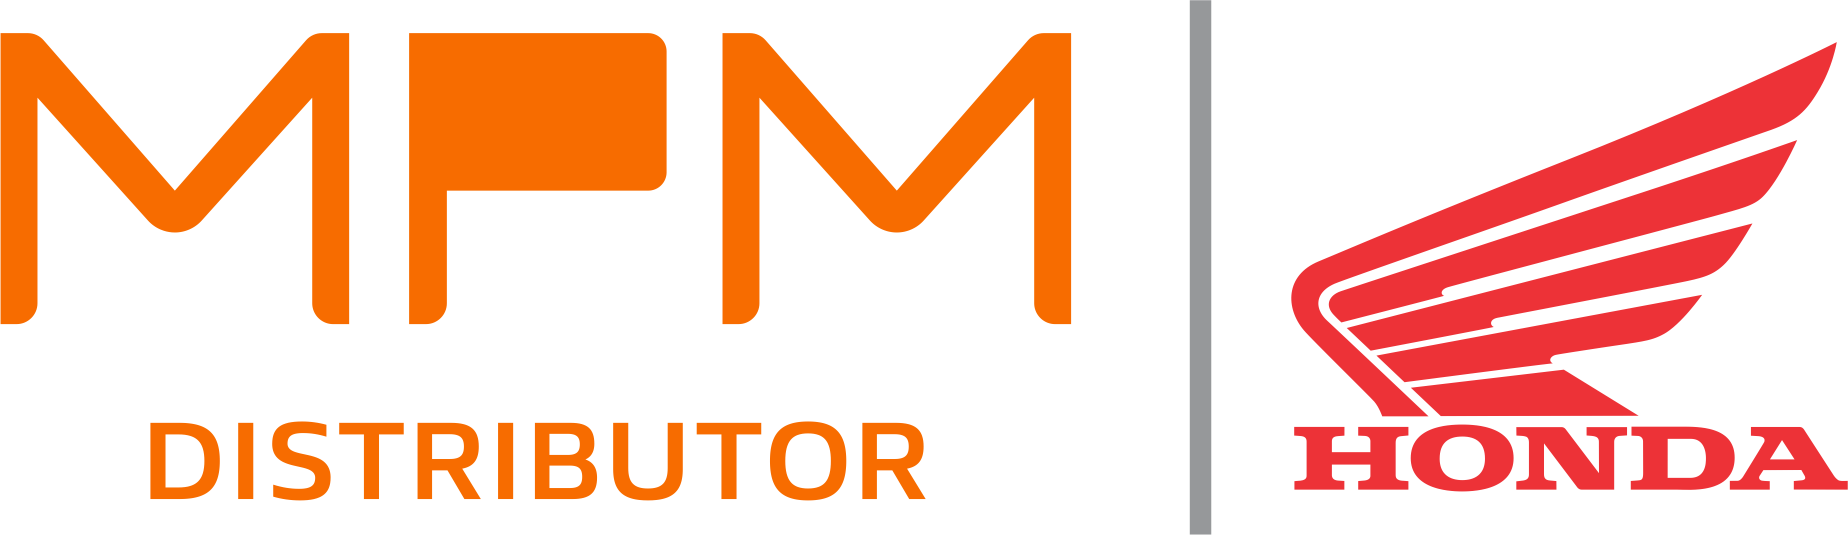 MPM Distributor